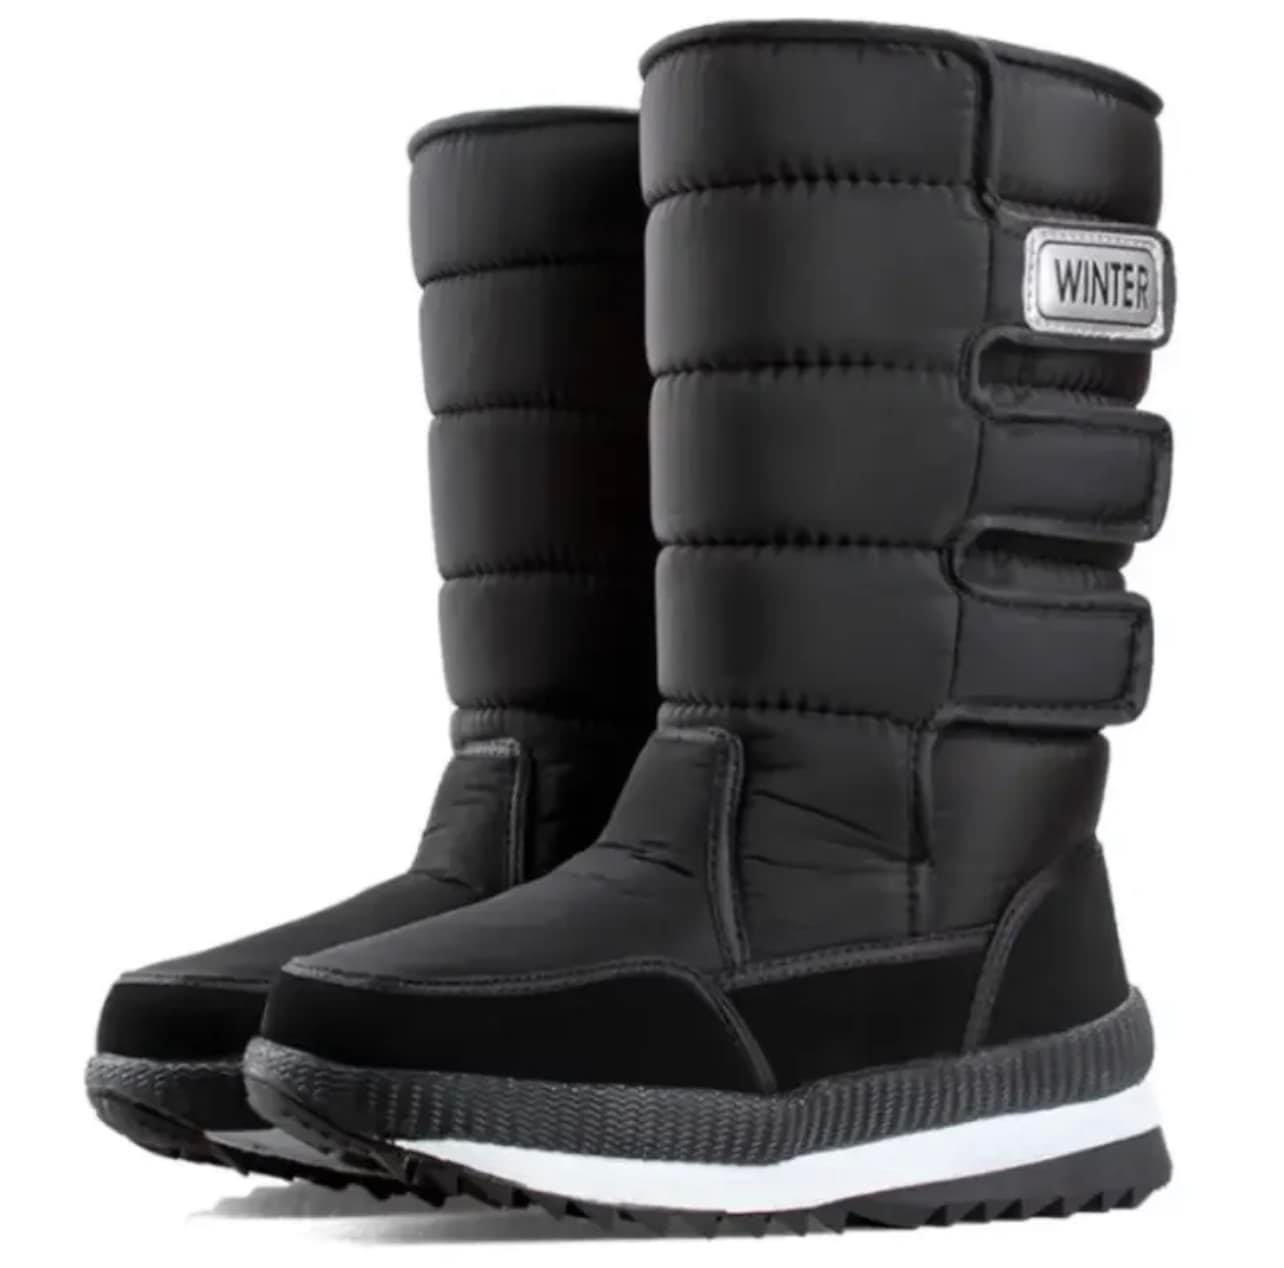 Unisex Snow Boots